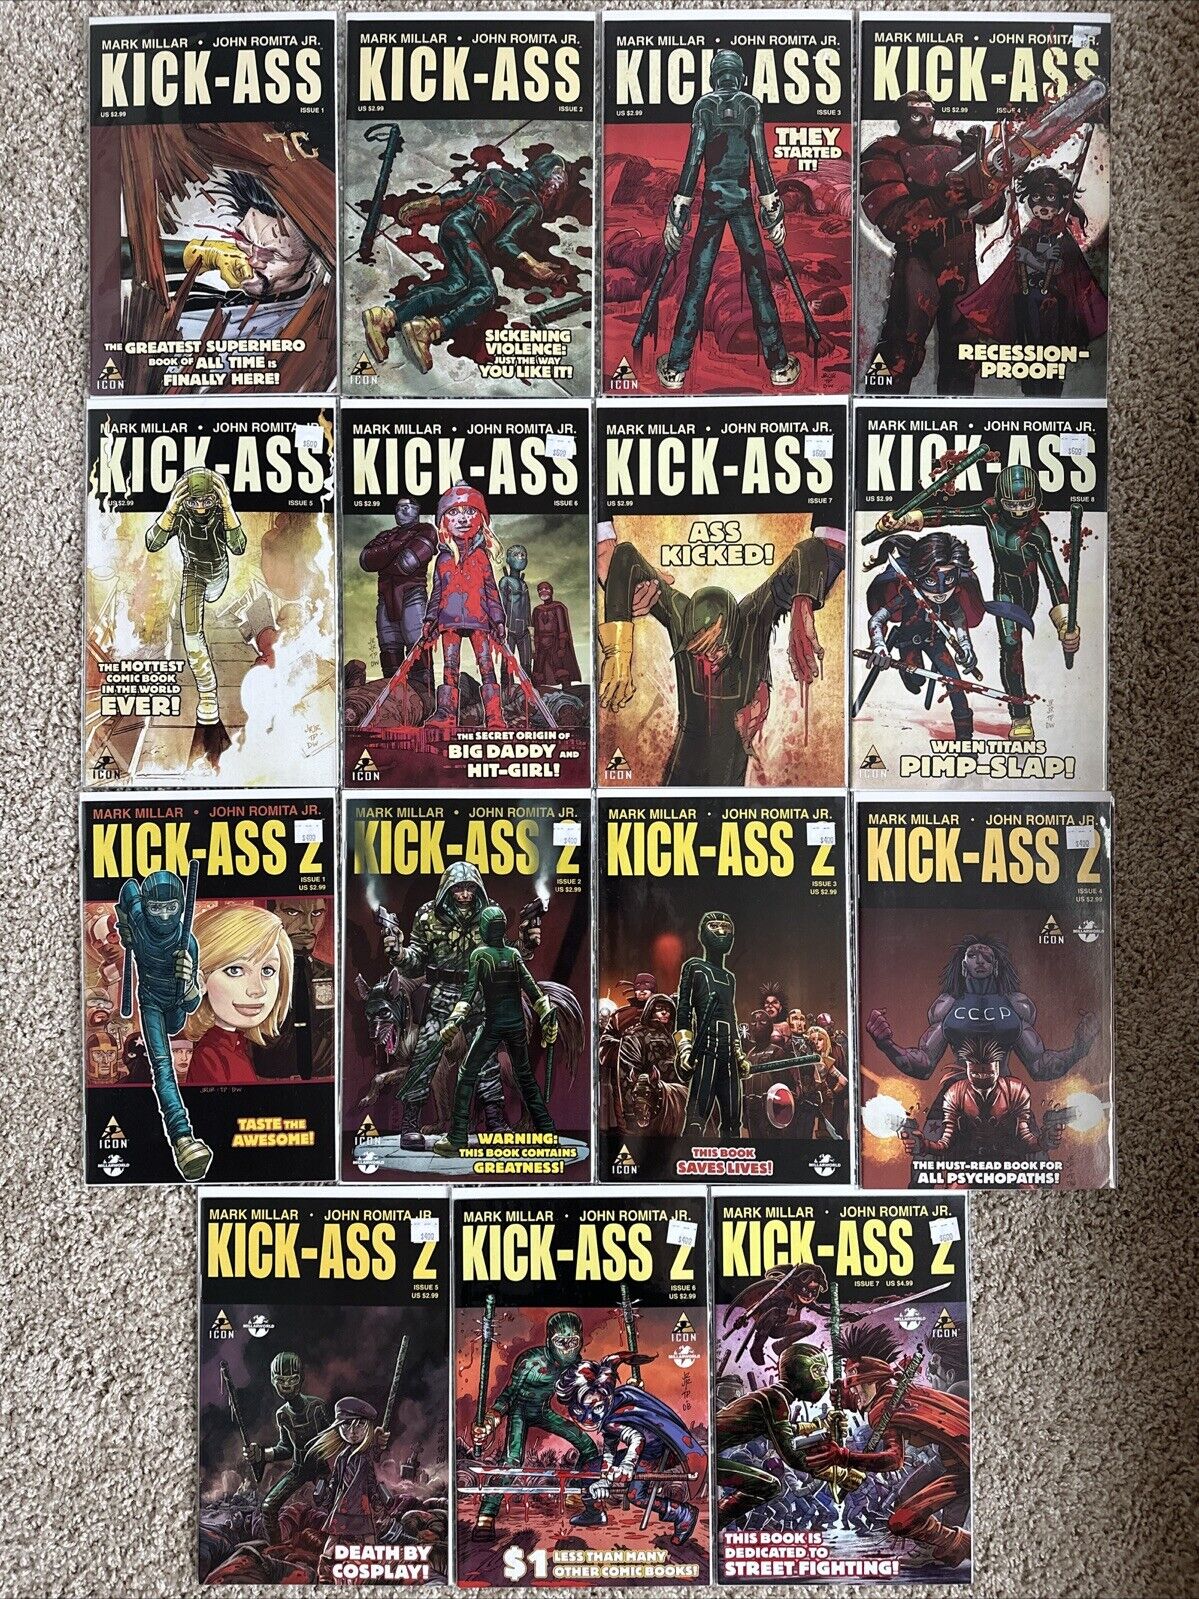 KICK-ASS #1-8 1st Prints Vol 2 #1-7 Complete Sets Icon Mark Millar Romita Jr NM